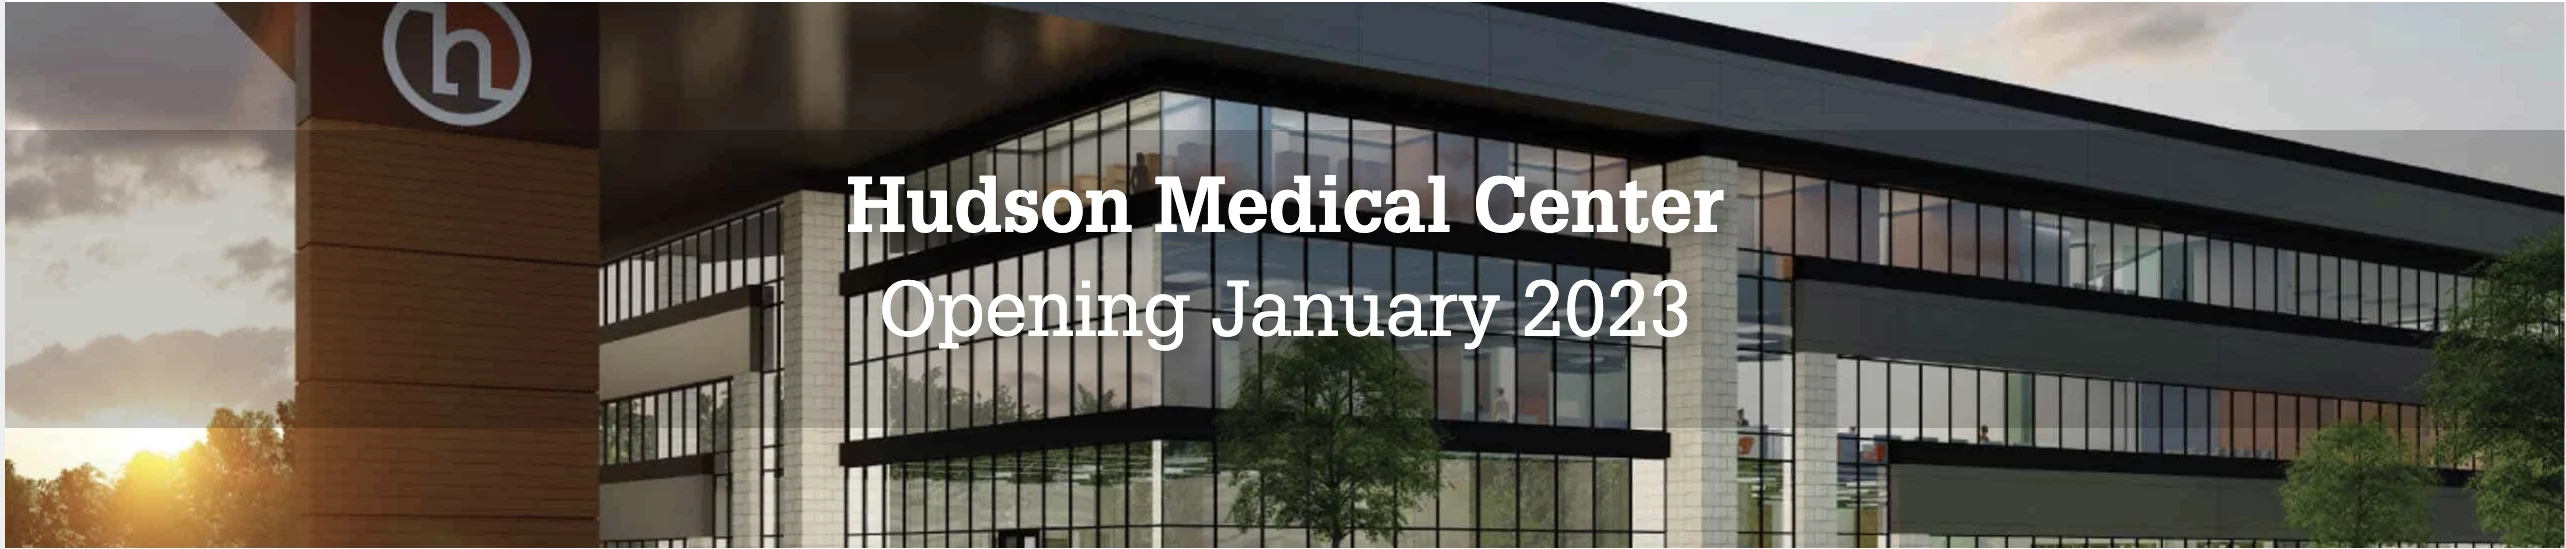 Coming Soon Hudson Medical Center 